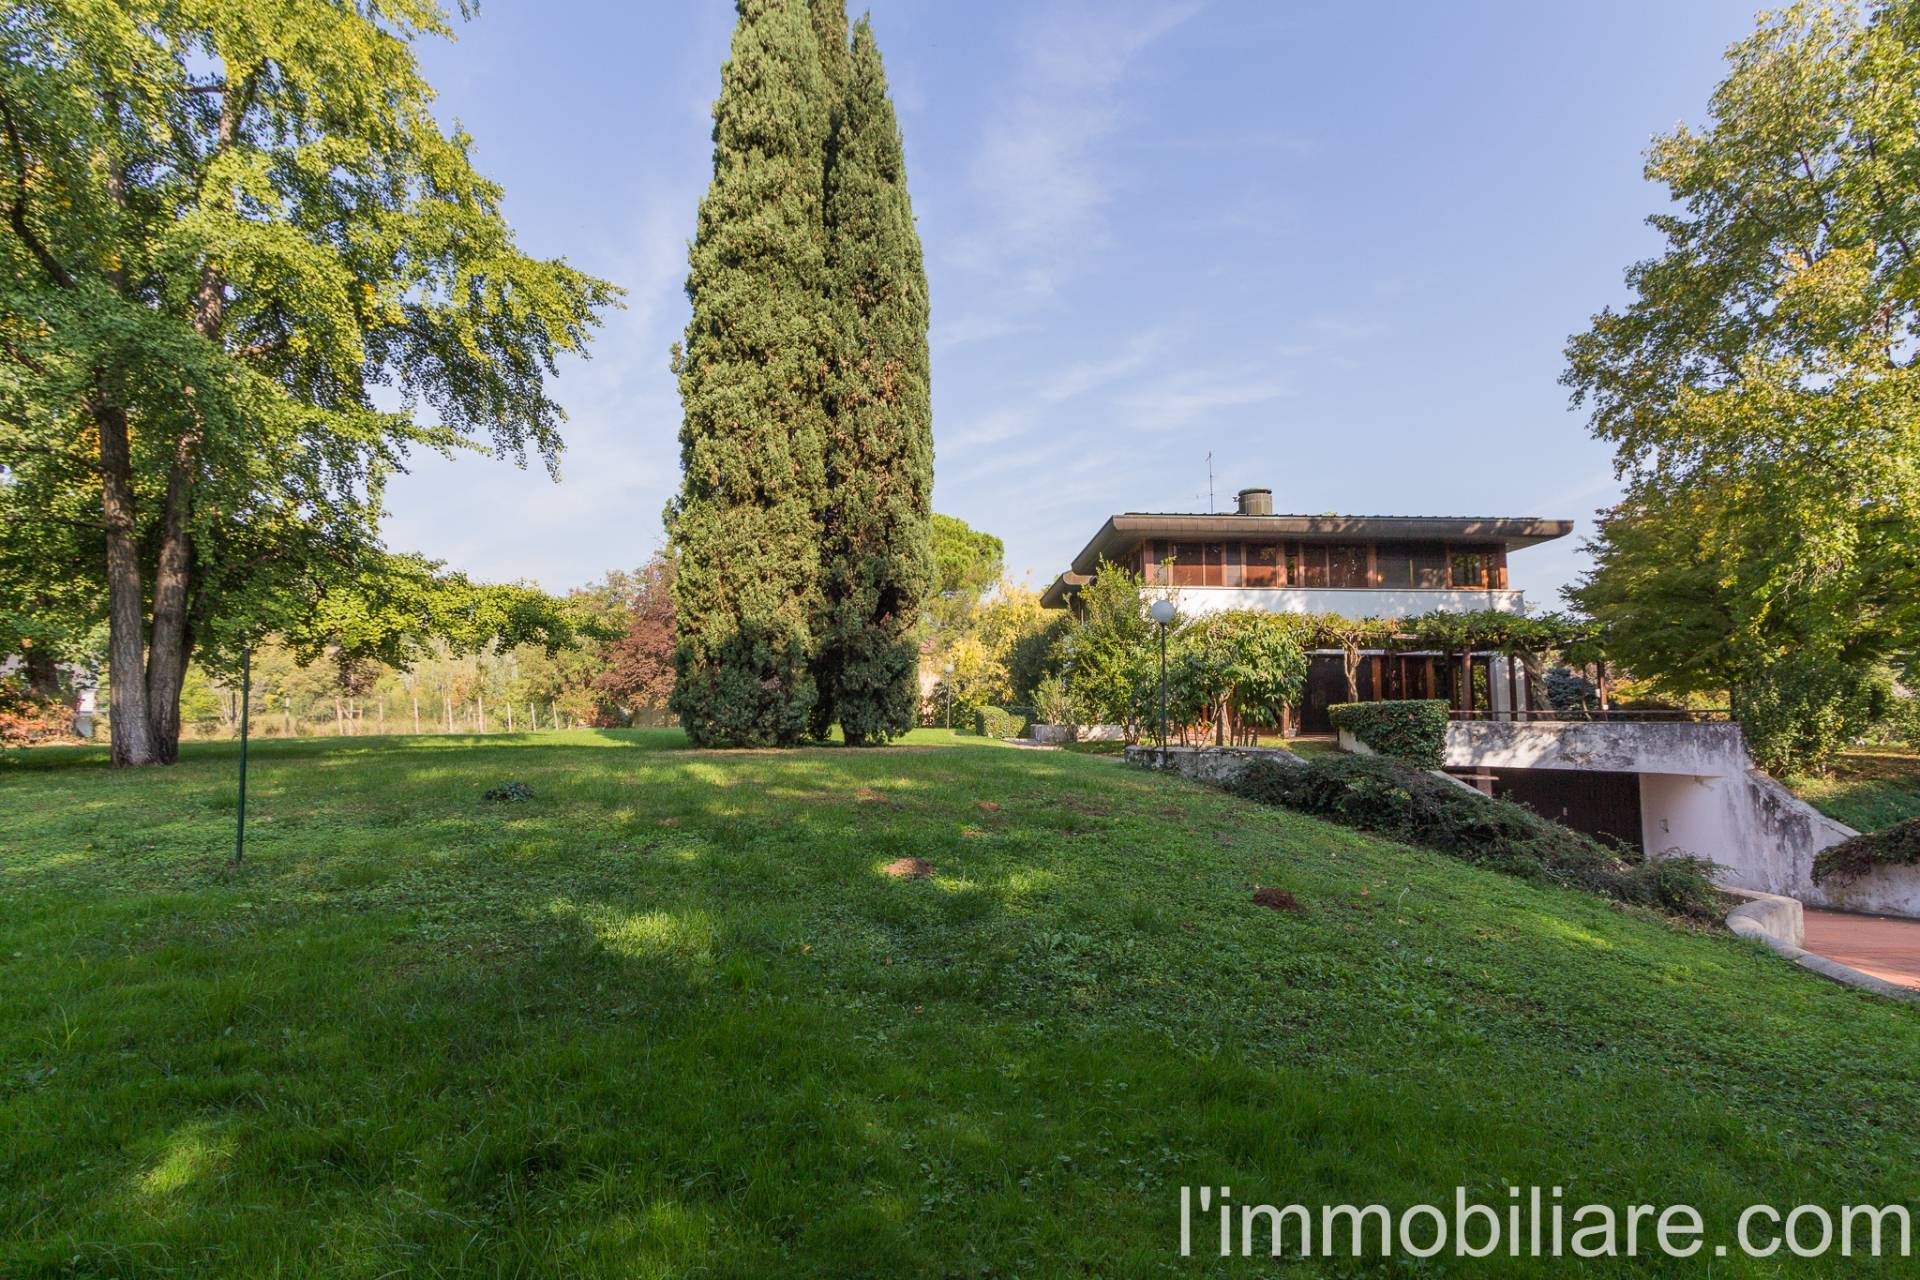 Villa in Vendita a Verona: 5 locali, 468 mq - Foto 5